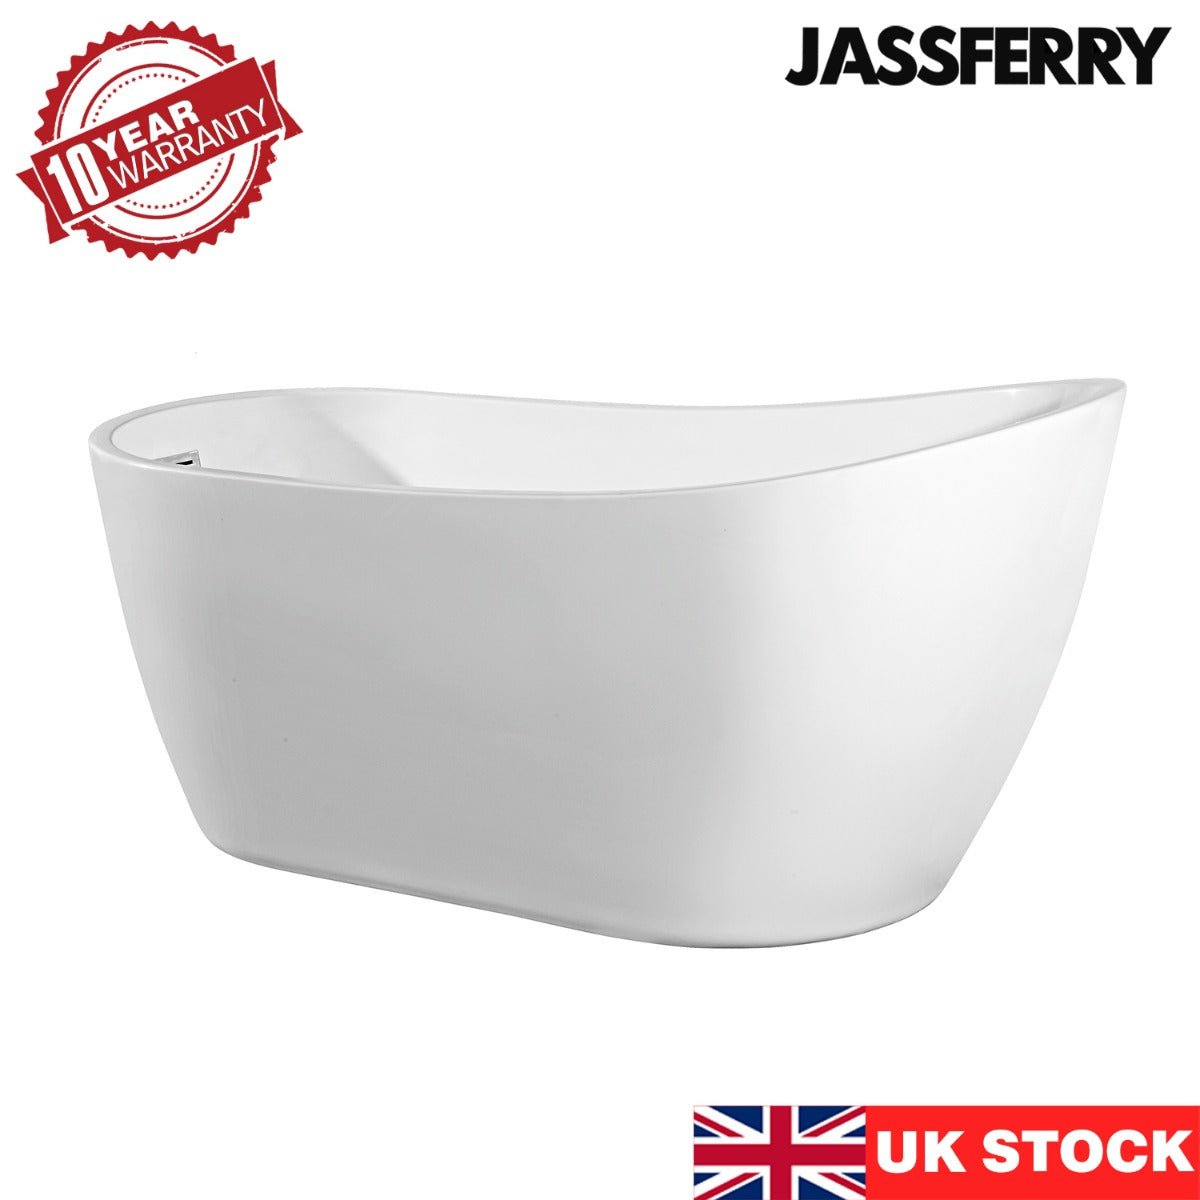 JassferryJASSFERRY Modern Design Freestanding Bathtub White Gloss Soaking Baths AcrylicBathtubs